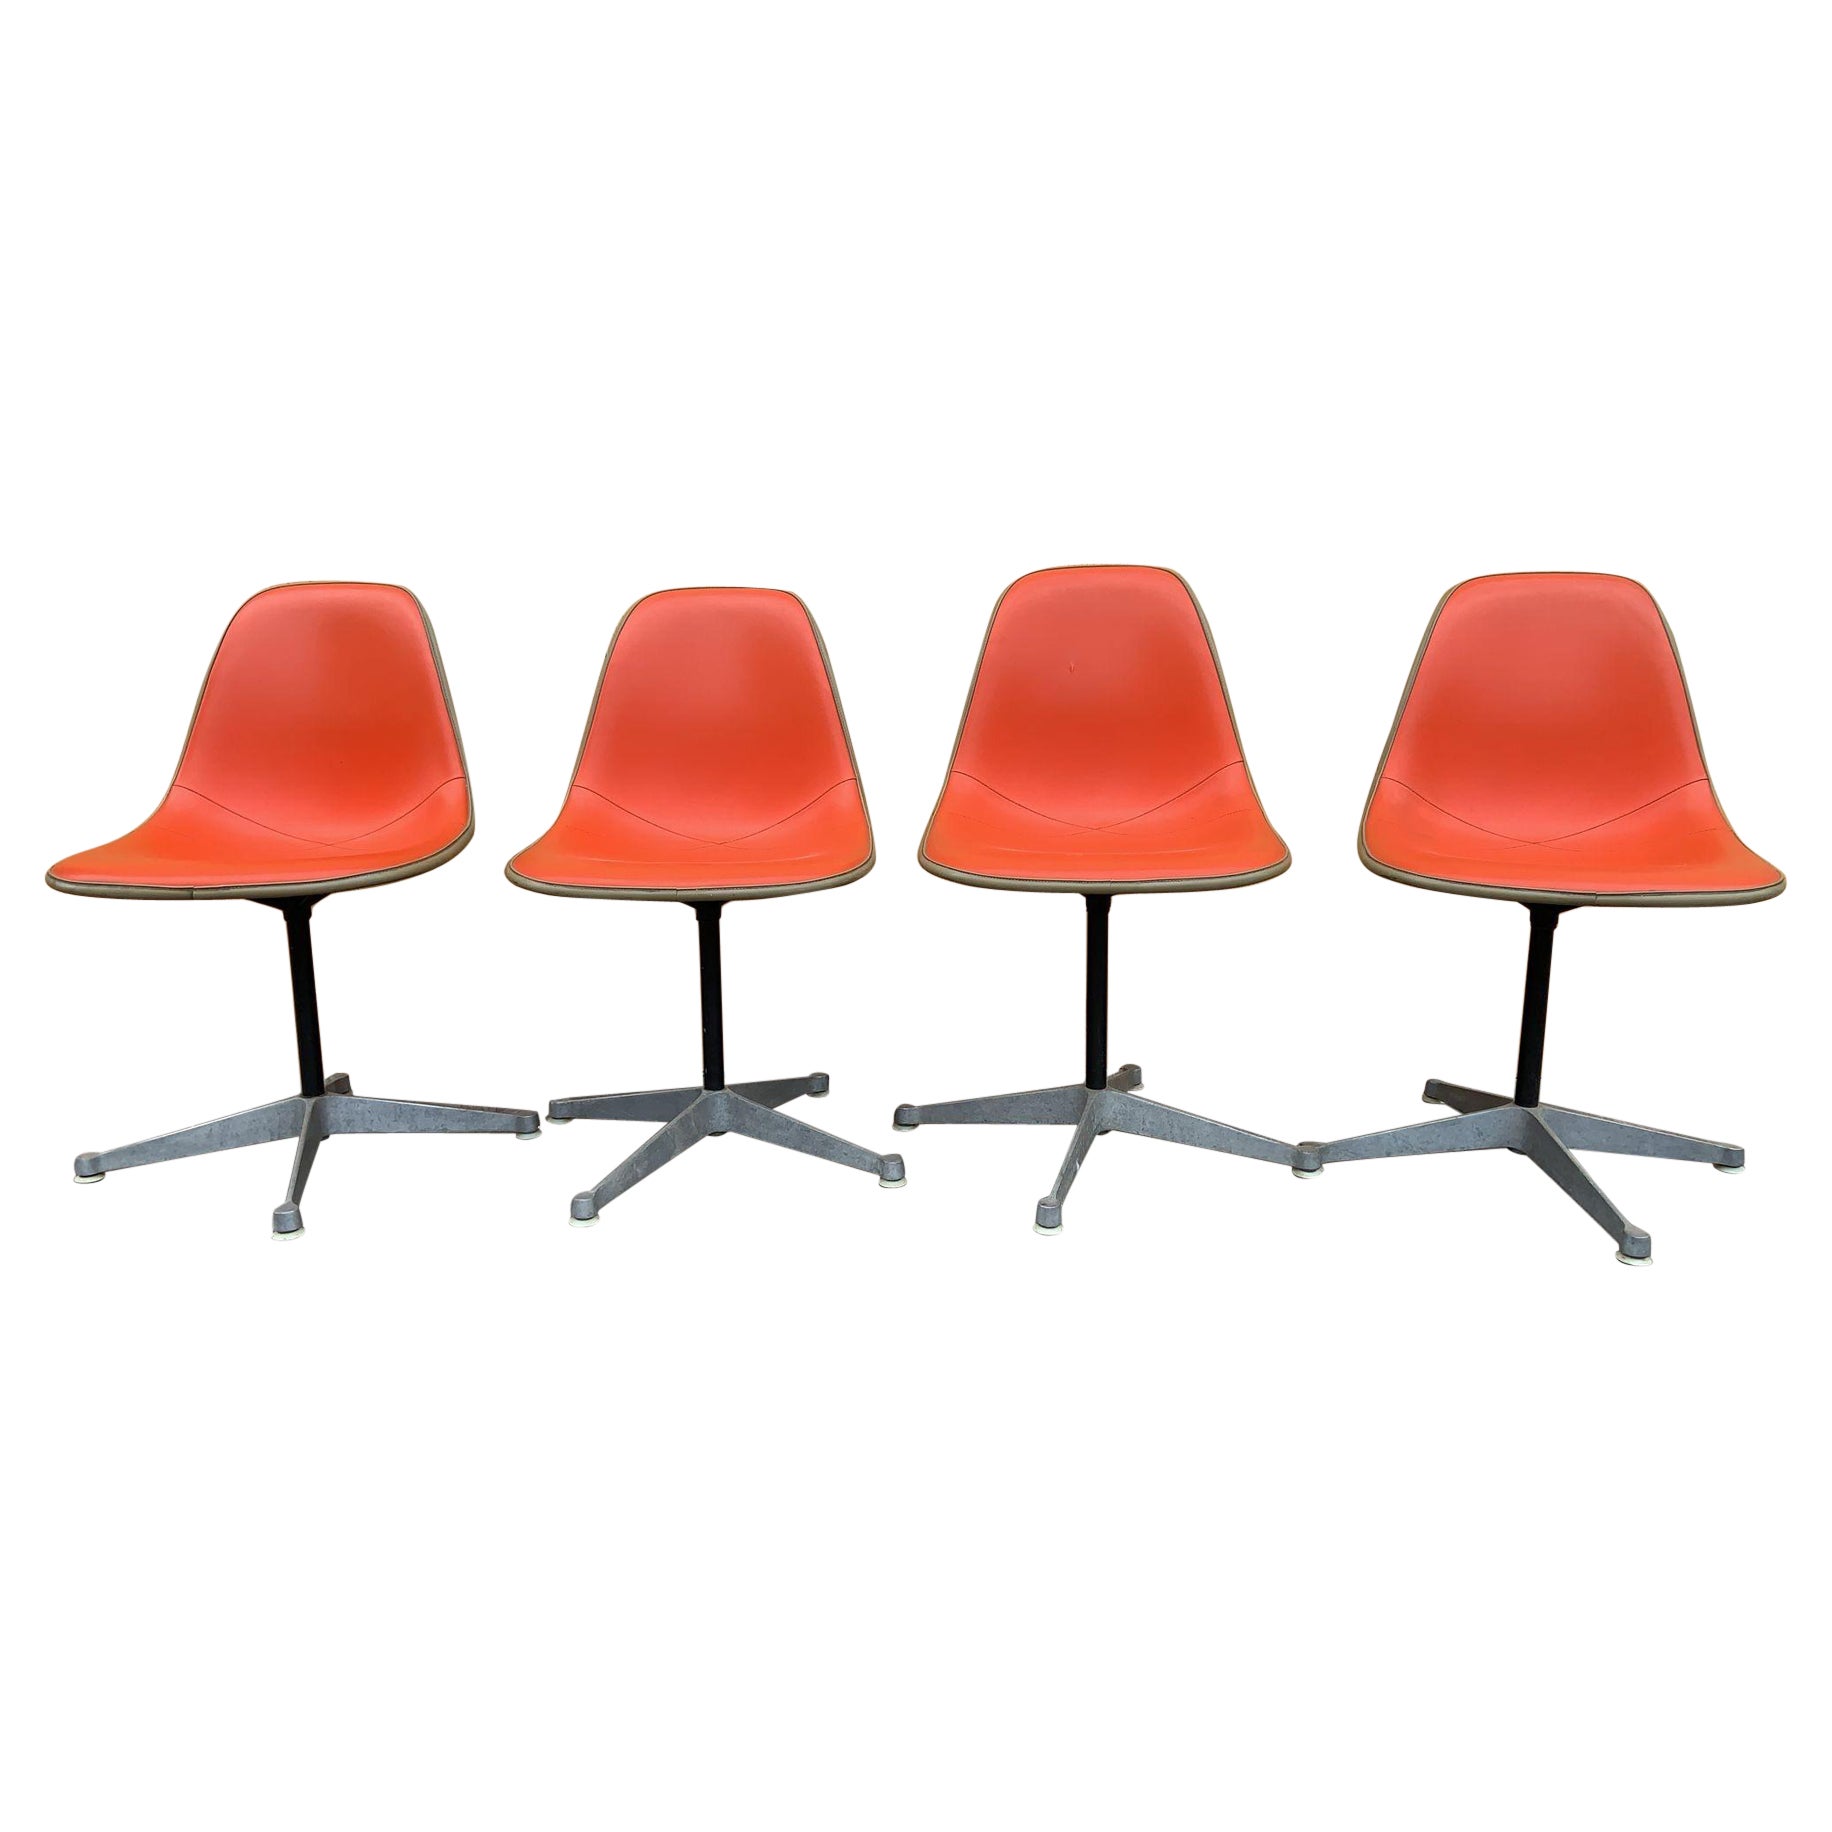 Mid-Century Herman Miller Swivel Shell Chairs in Red Orange Vinyl - Set of 4 For Sale